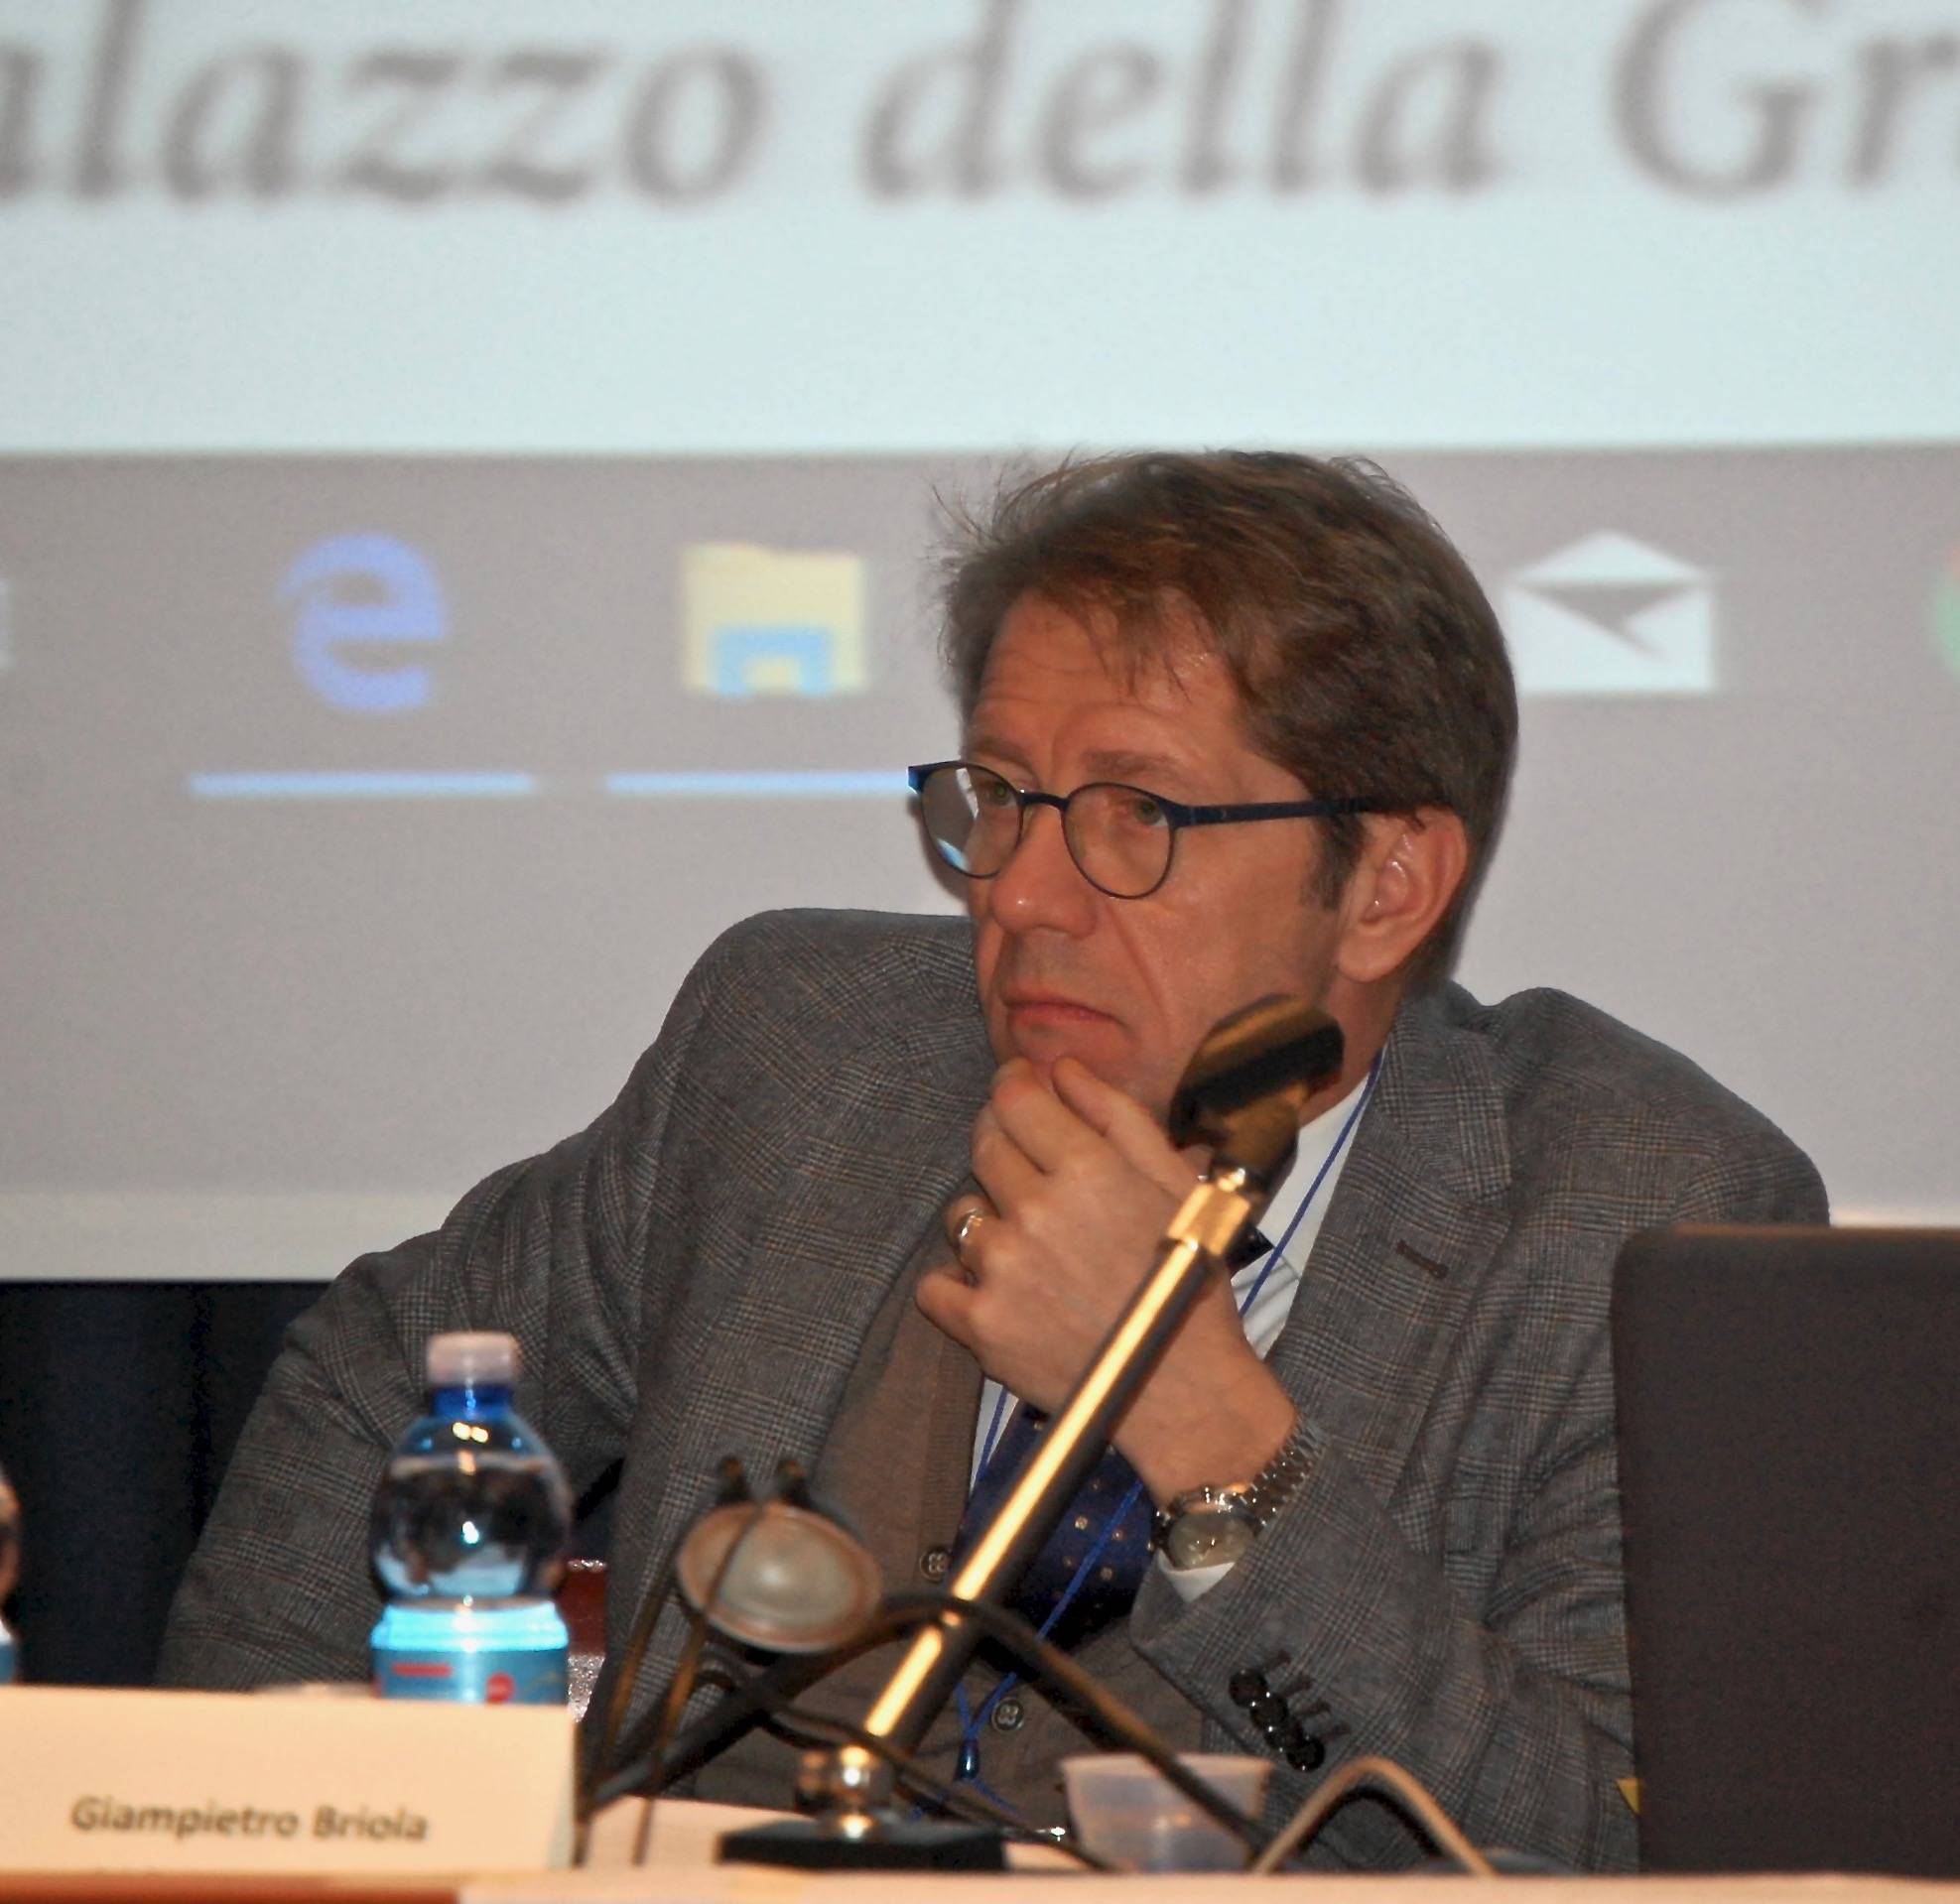 Gianpietro Briola